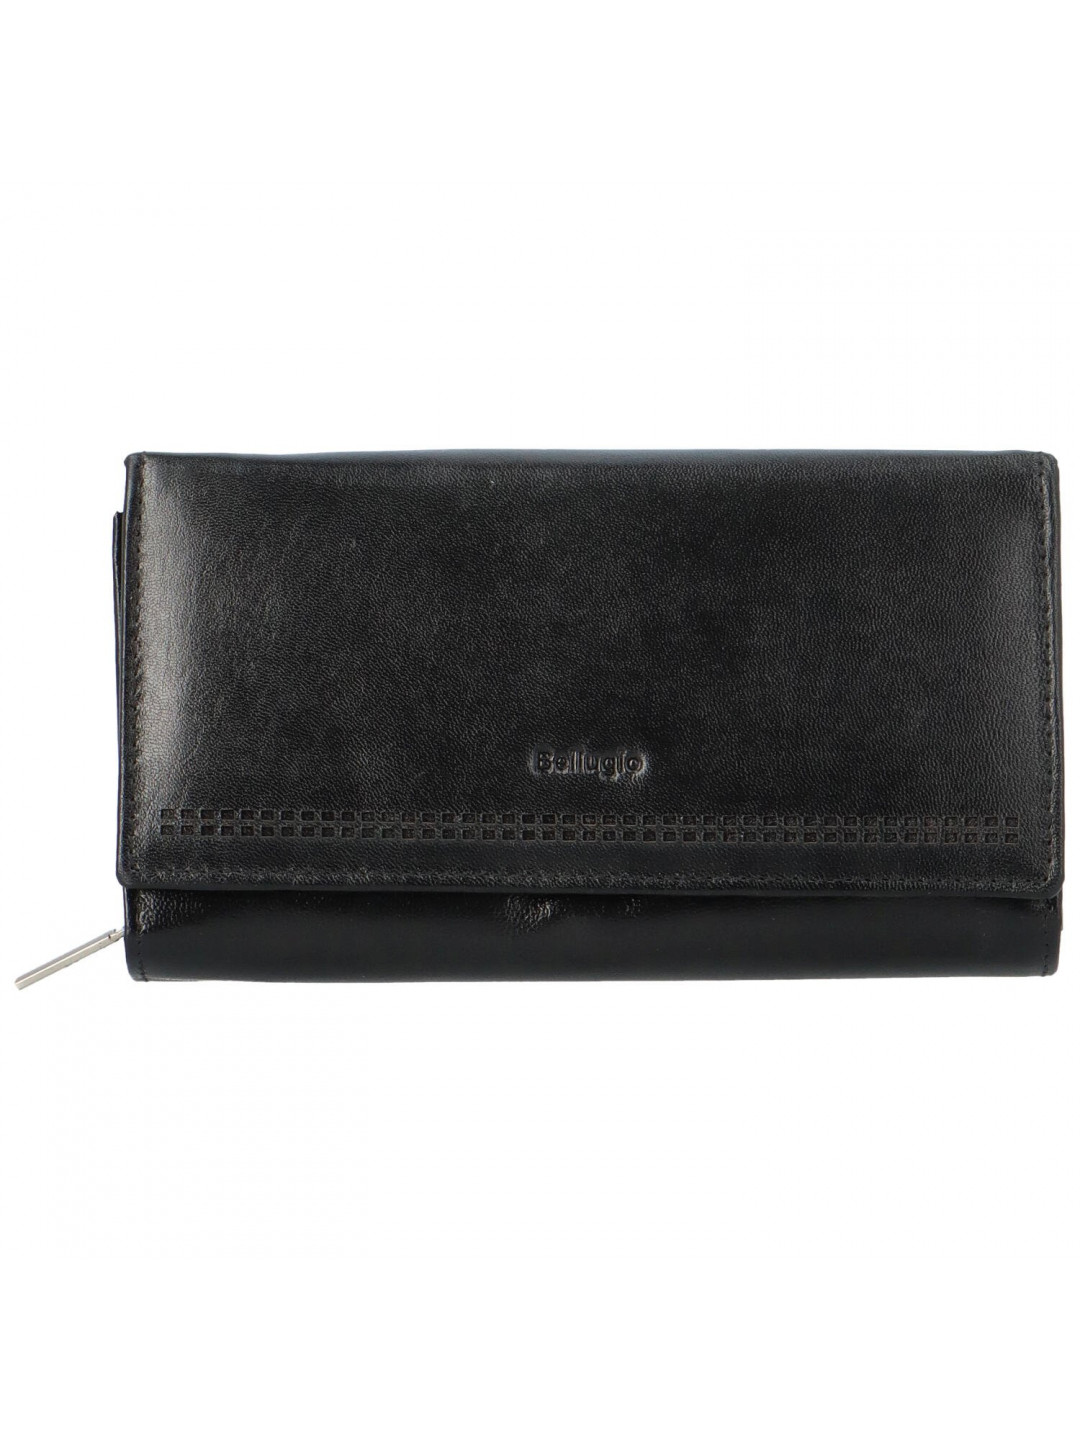 Dámská kožená peněženka Bellugio Utaraxa černá